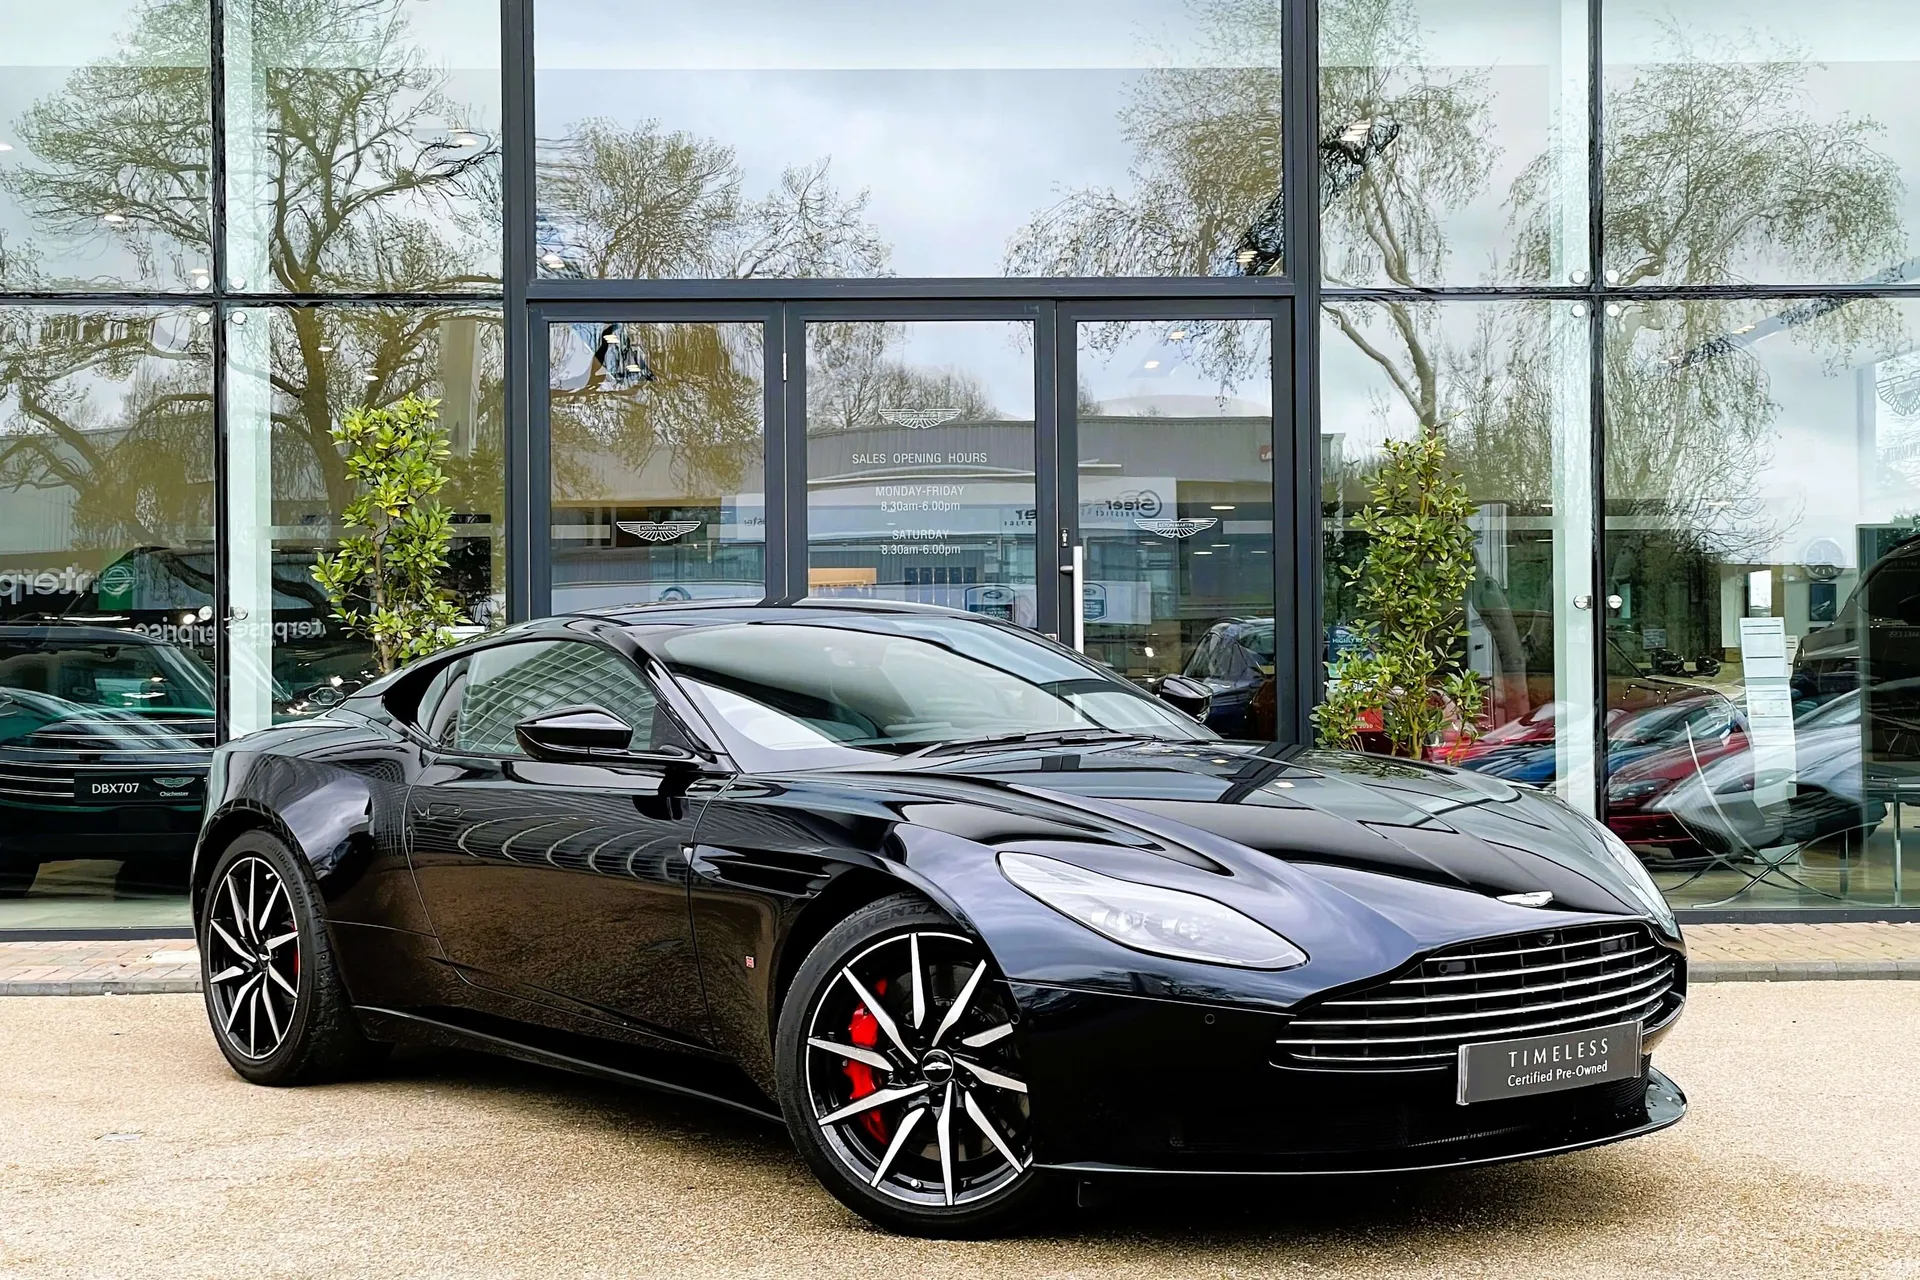 Aston Martin DB11 focused image